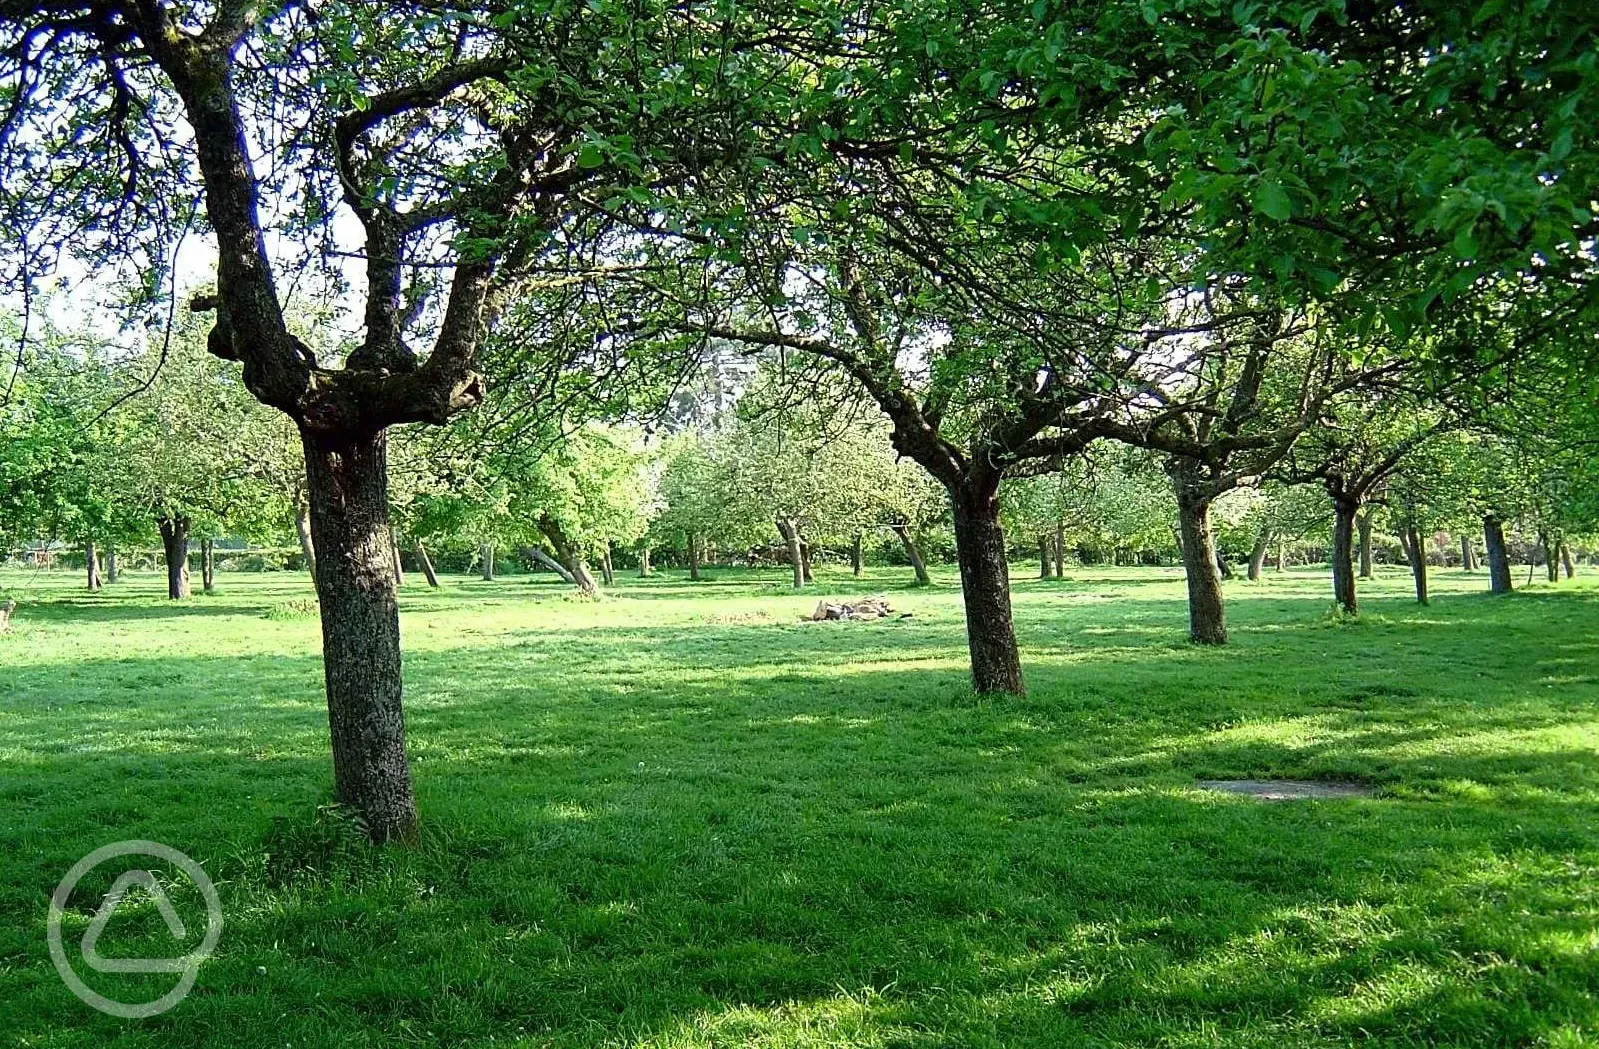 Camping orchard